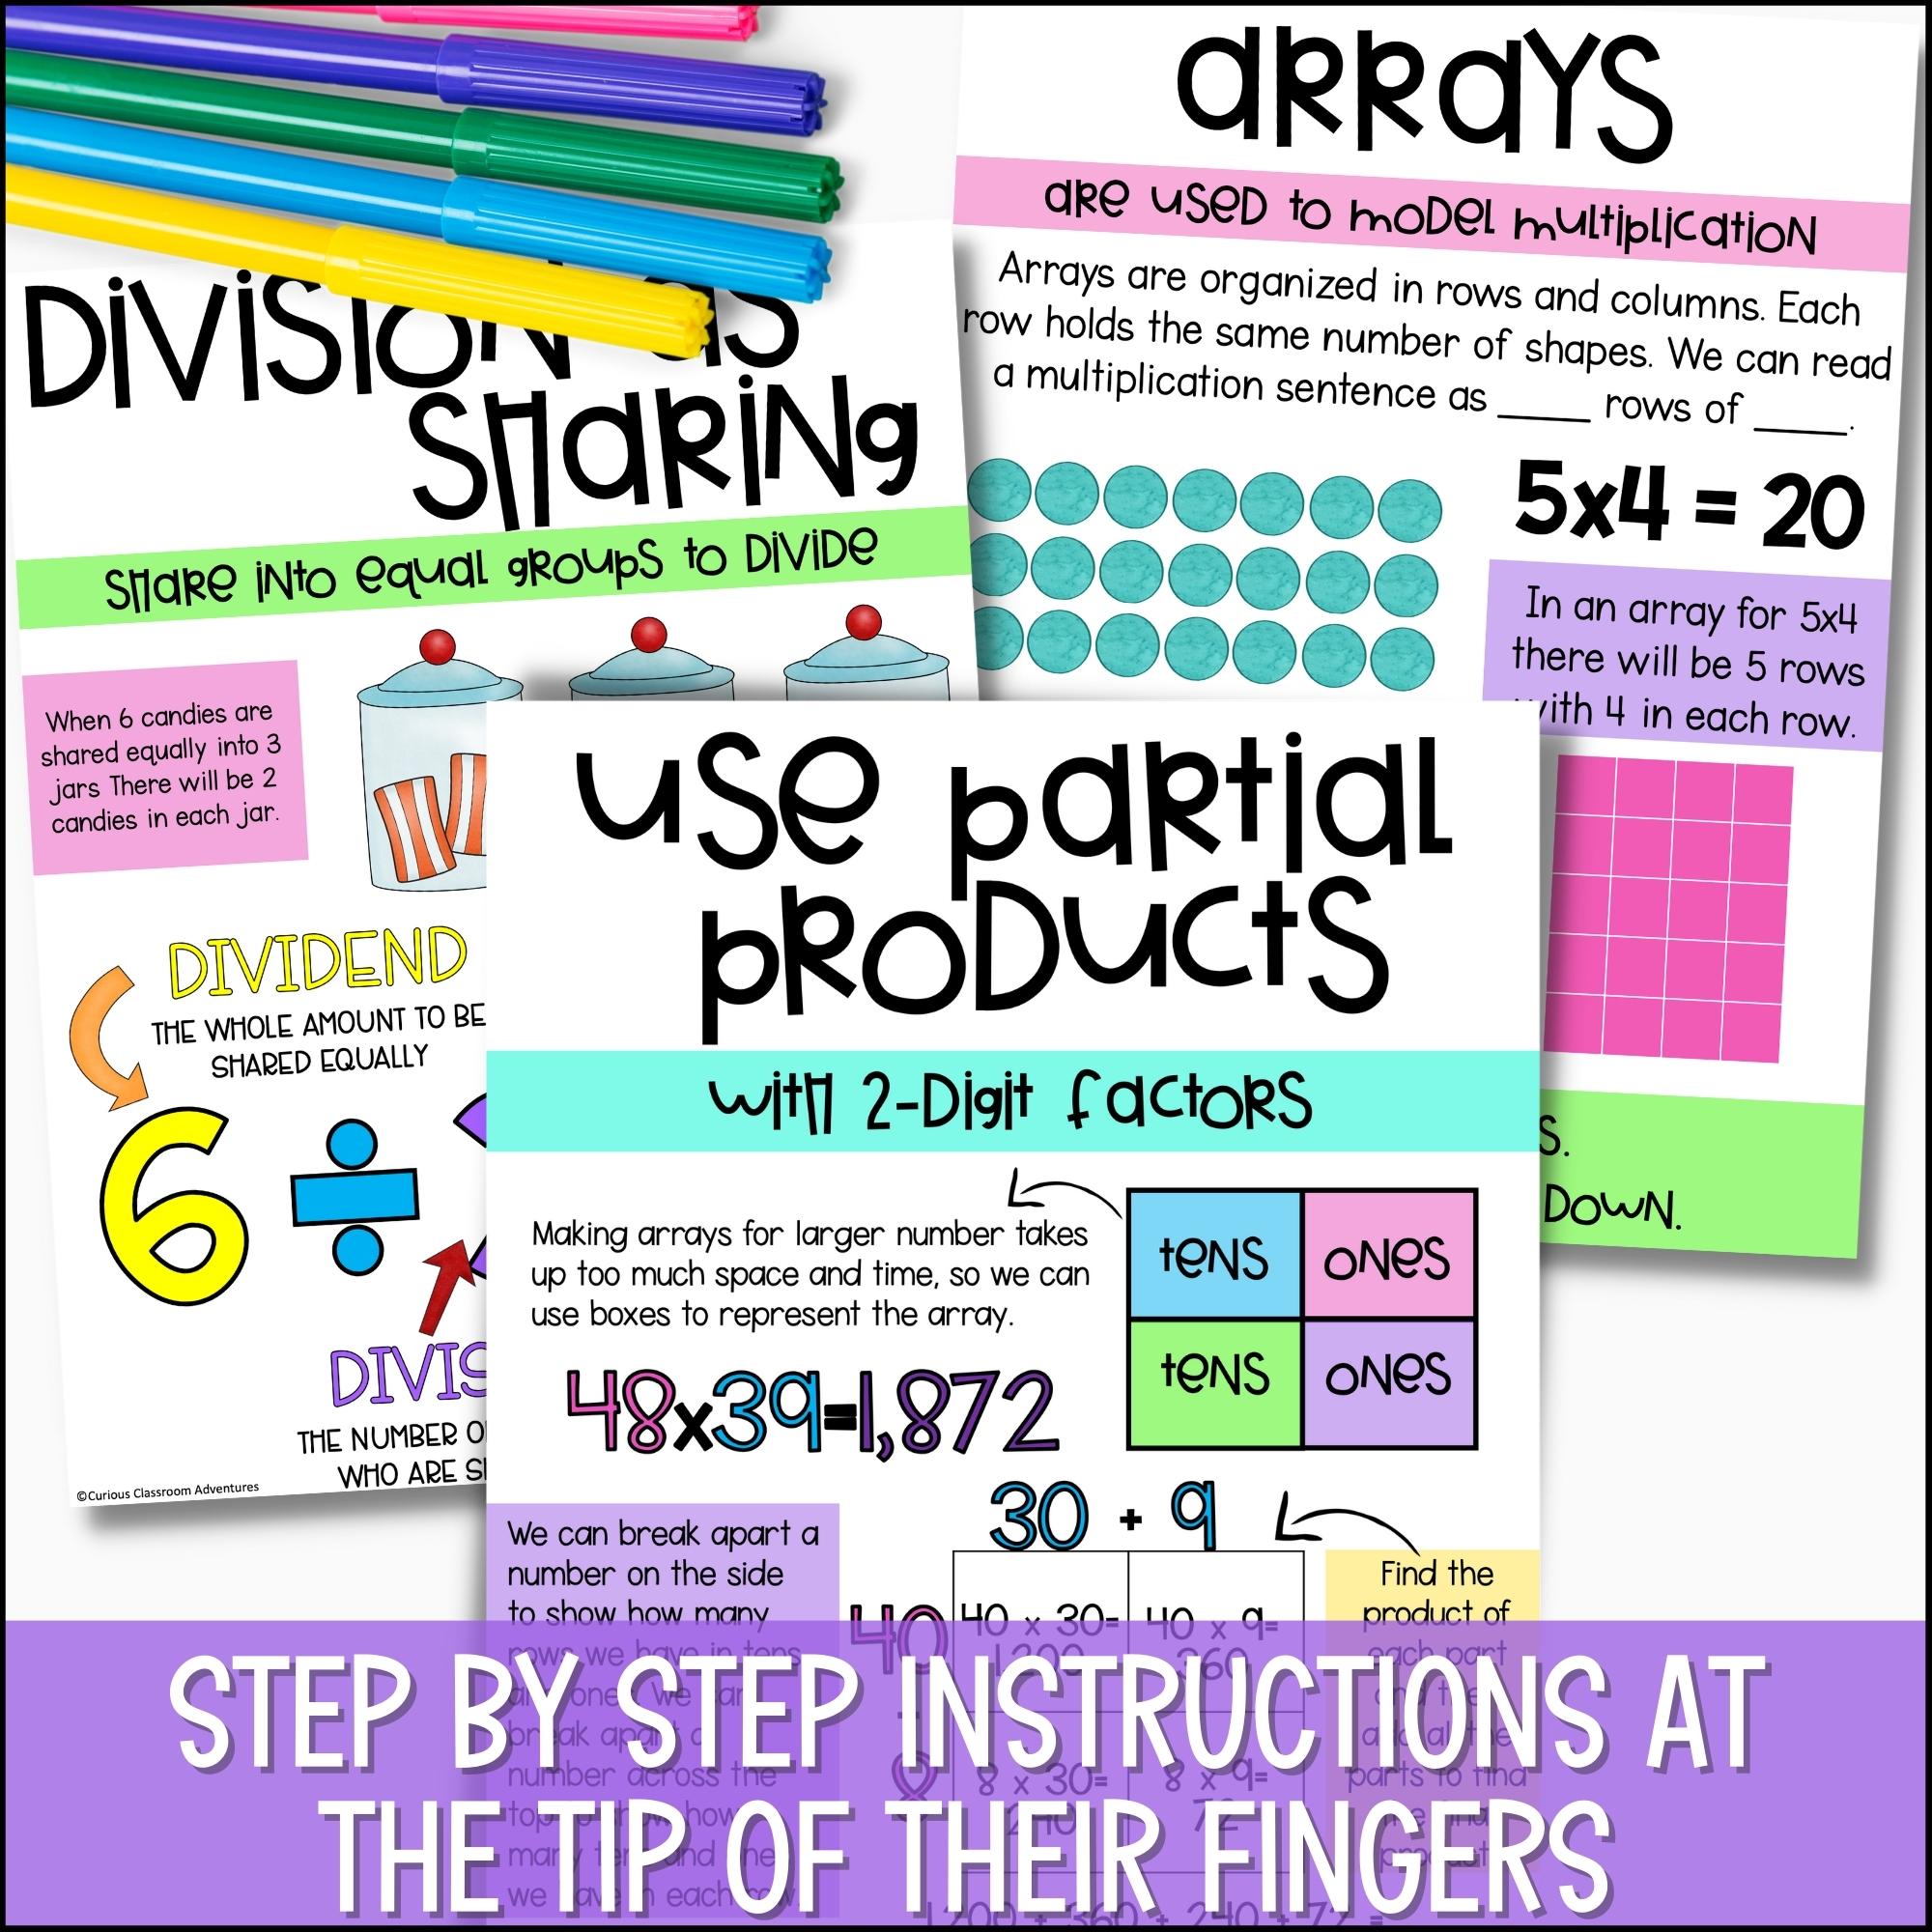 Math Anchor Charts Bundle for 3rd and 4th Grade Math - Curious